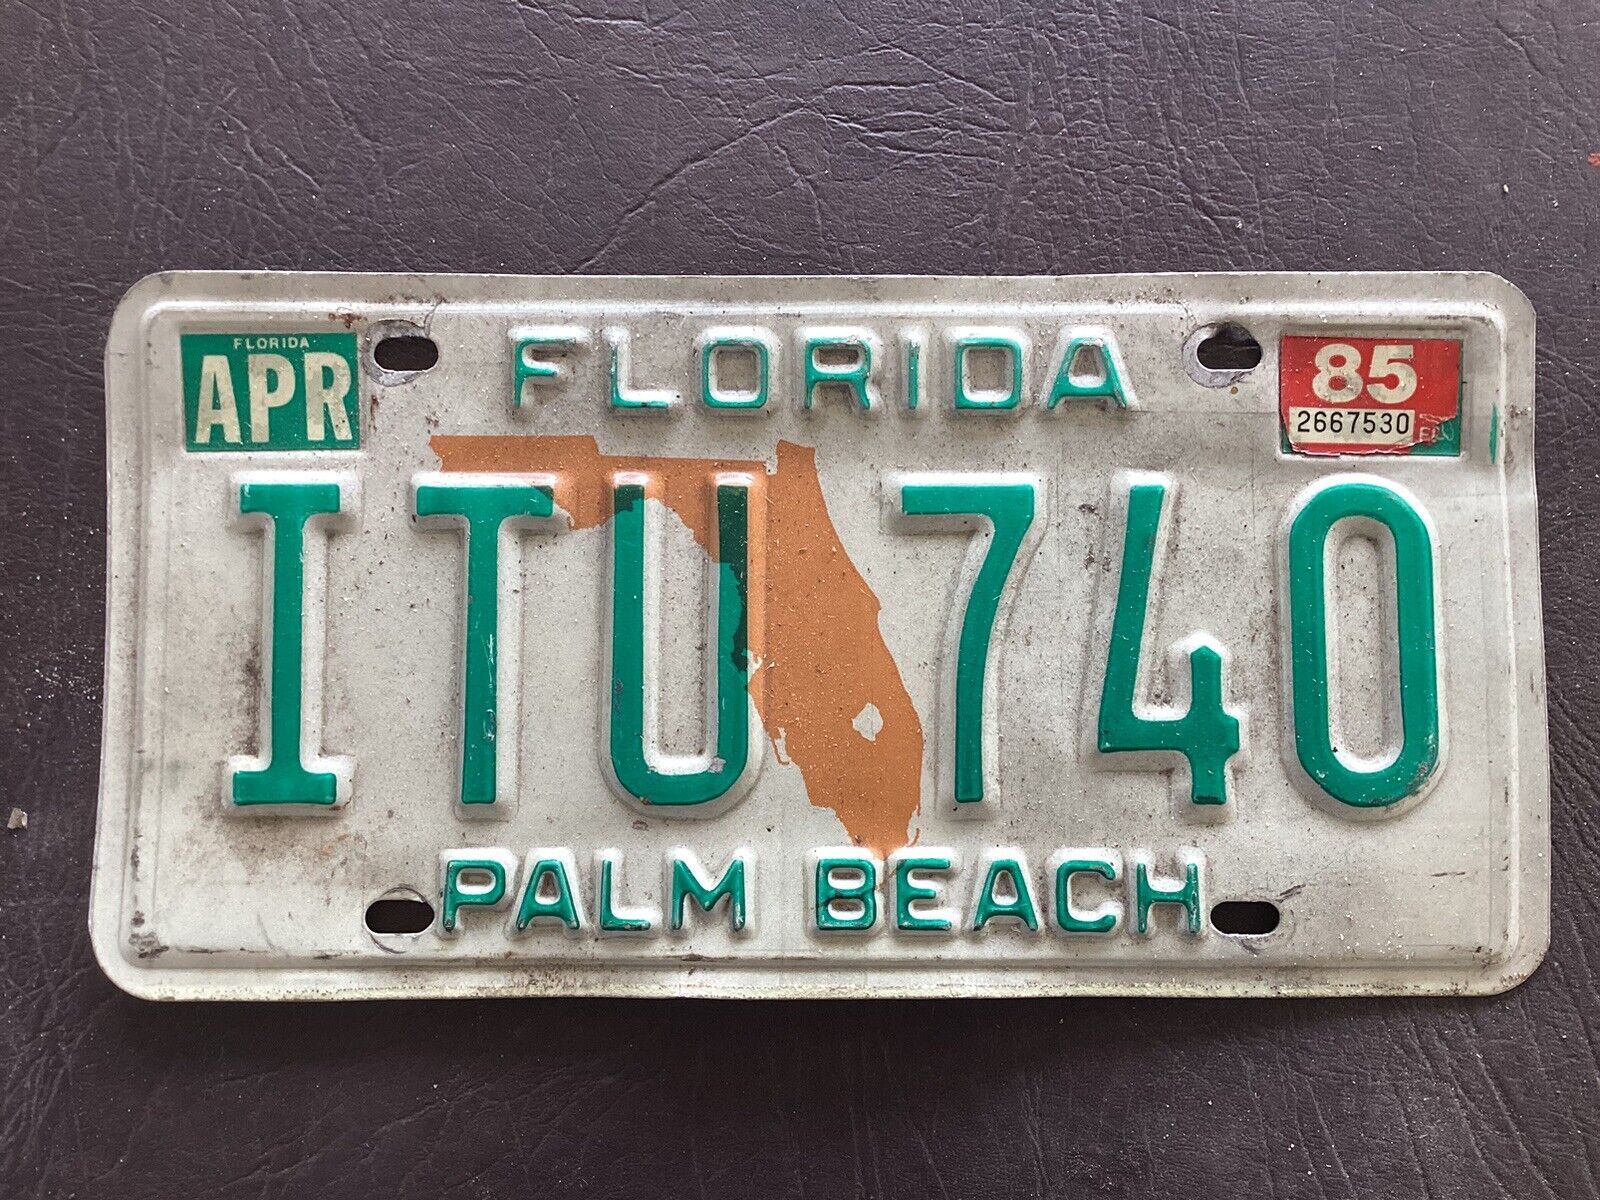 Florida License Plate 1985 Palm Beach ITU740